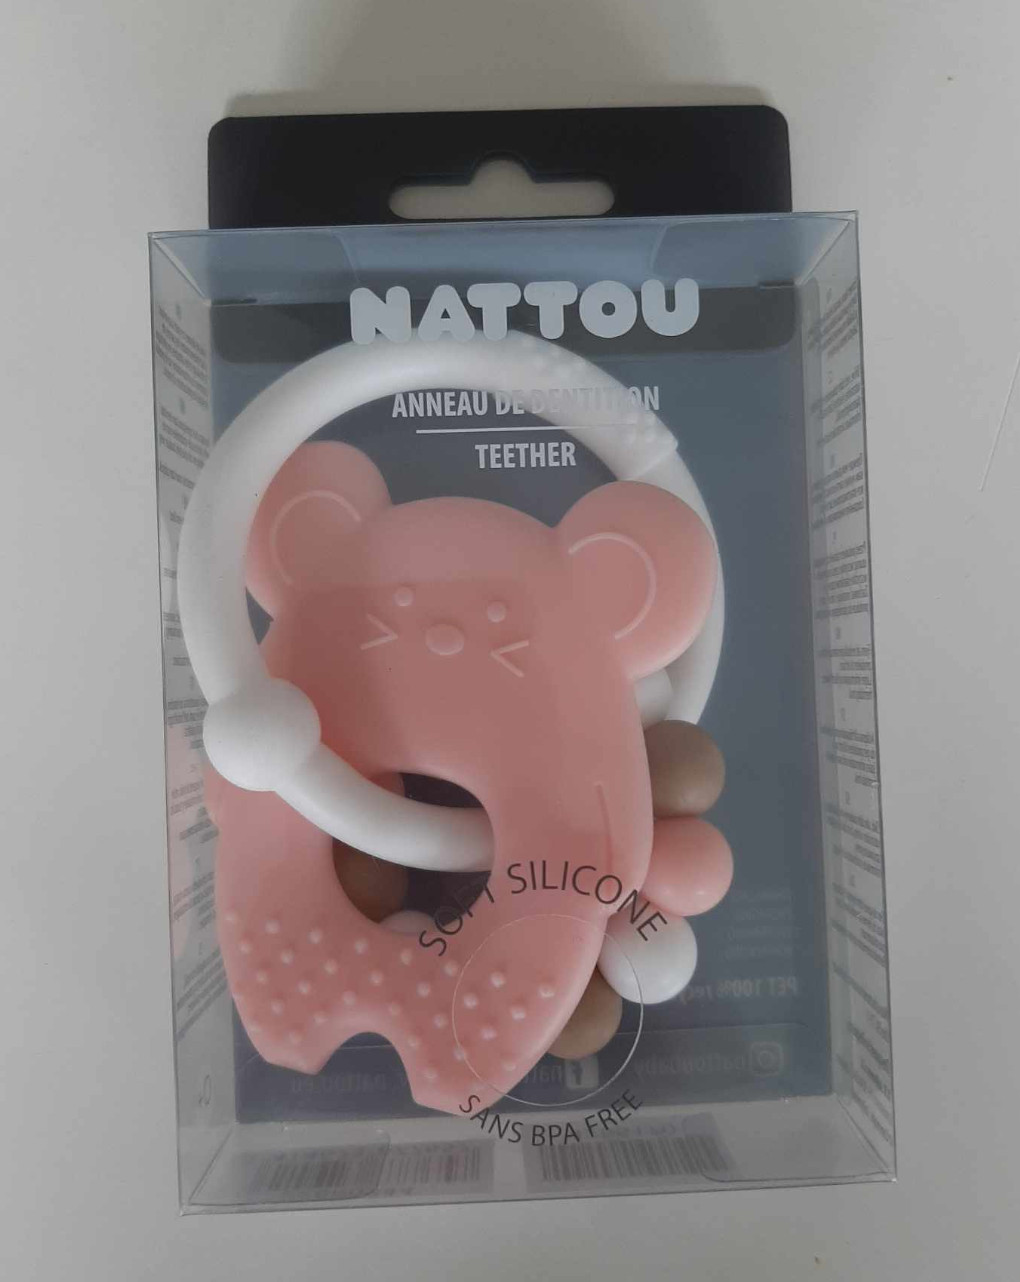 Nattou - Anneau de dentition silicone